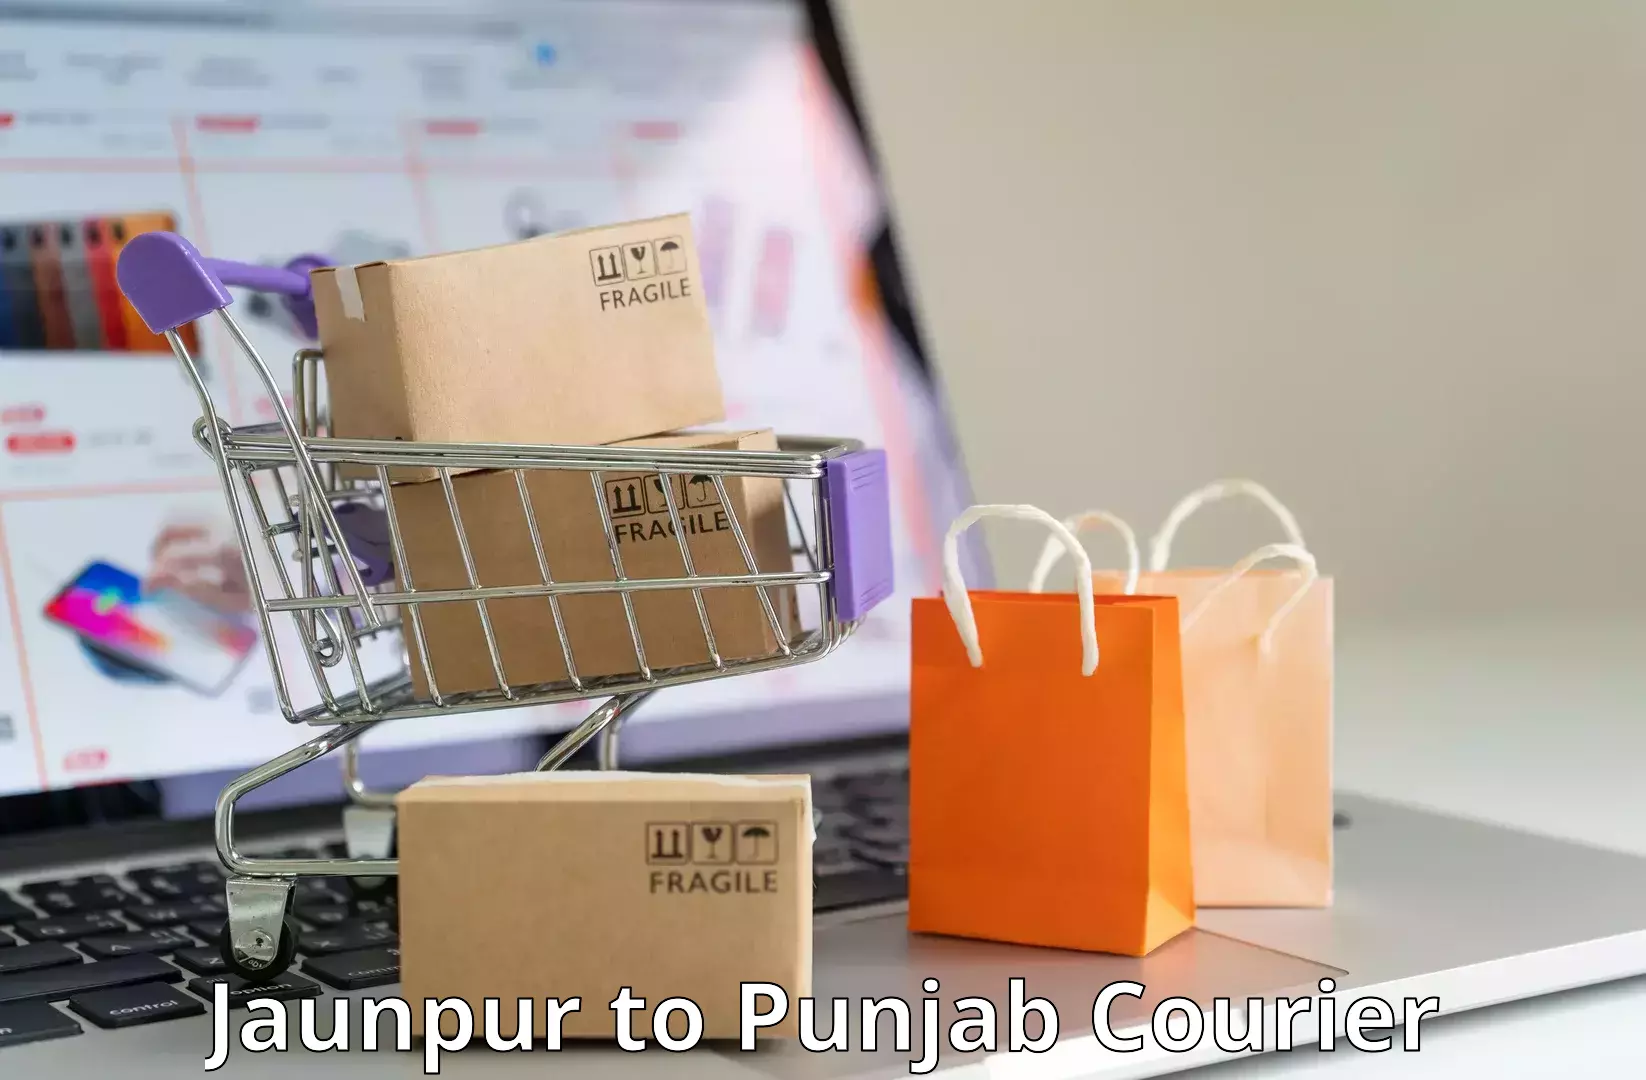 Digital courier platforms Jaunpur to Patiala